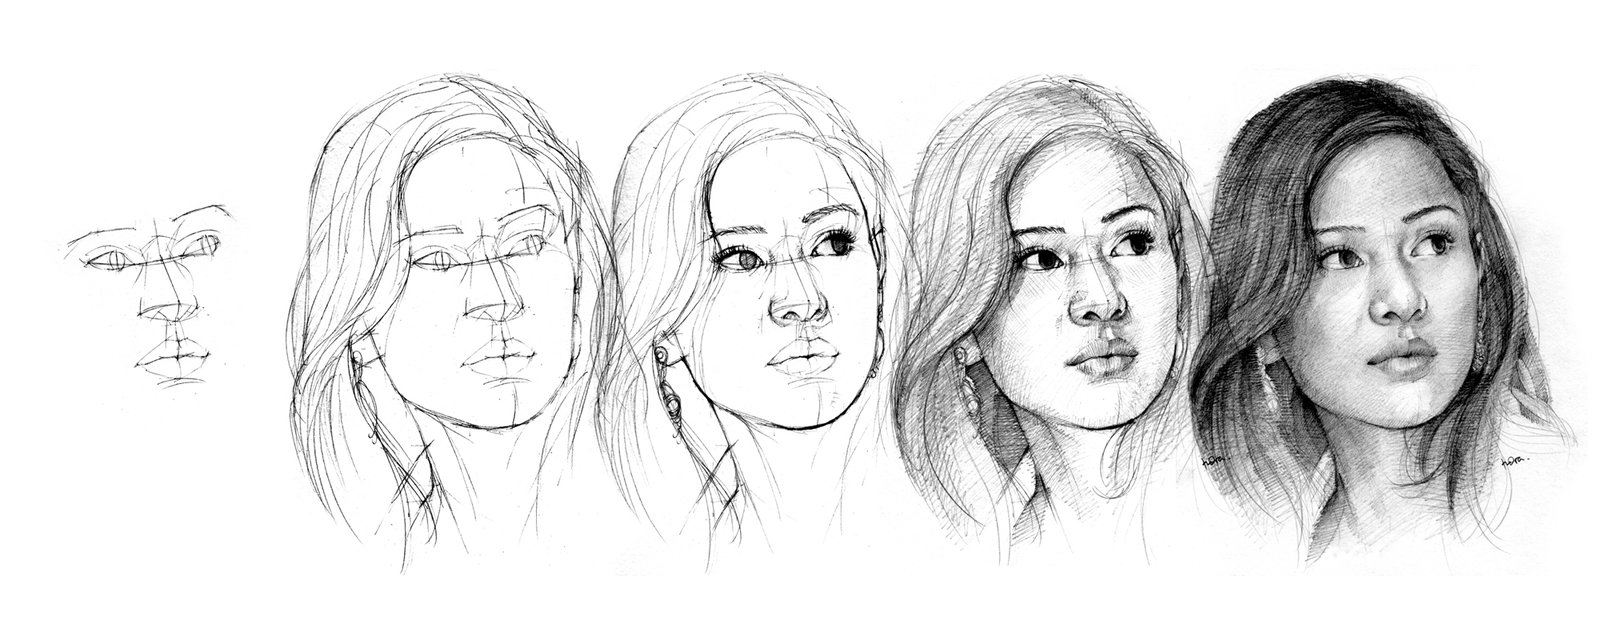 Belajar menggambar wajah bagian 2 ~ Kumpulan ide-ide kreatif dan iniovatif